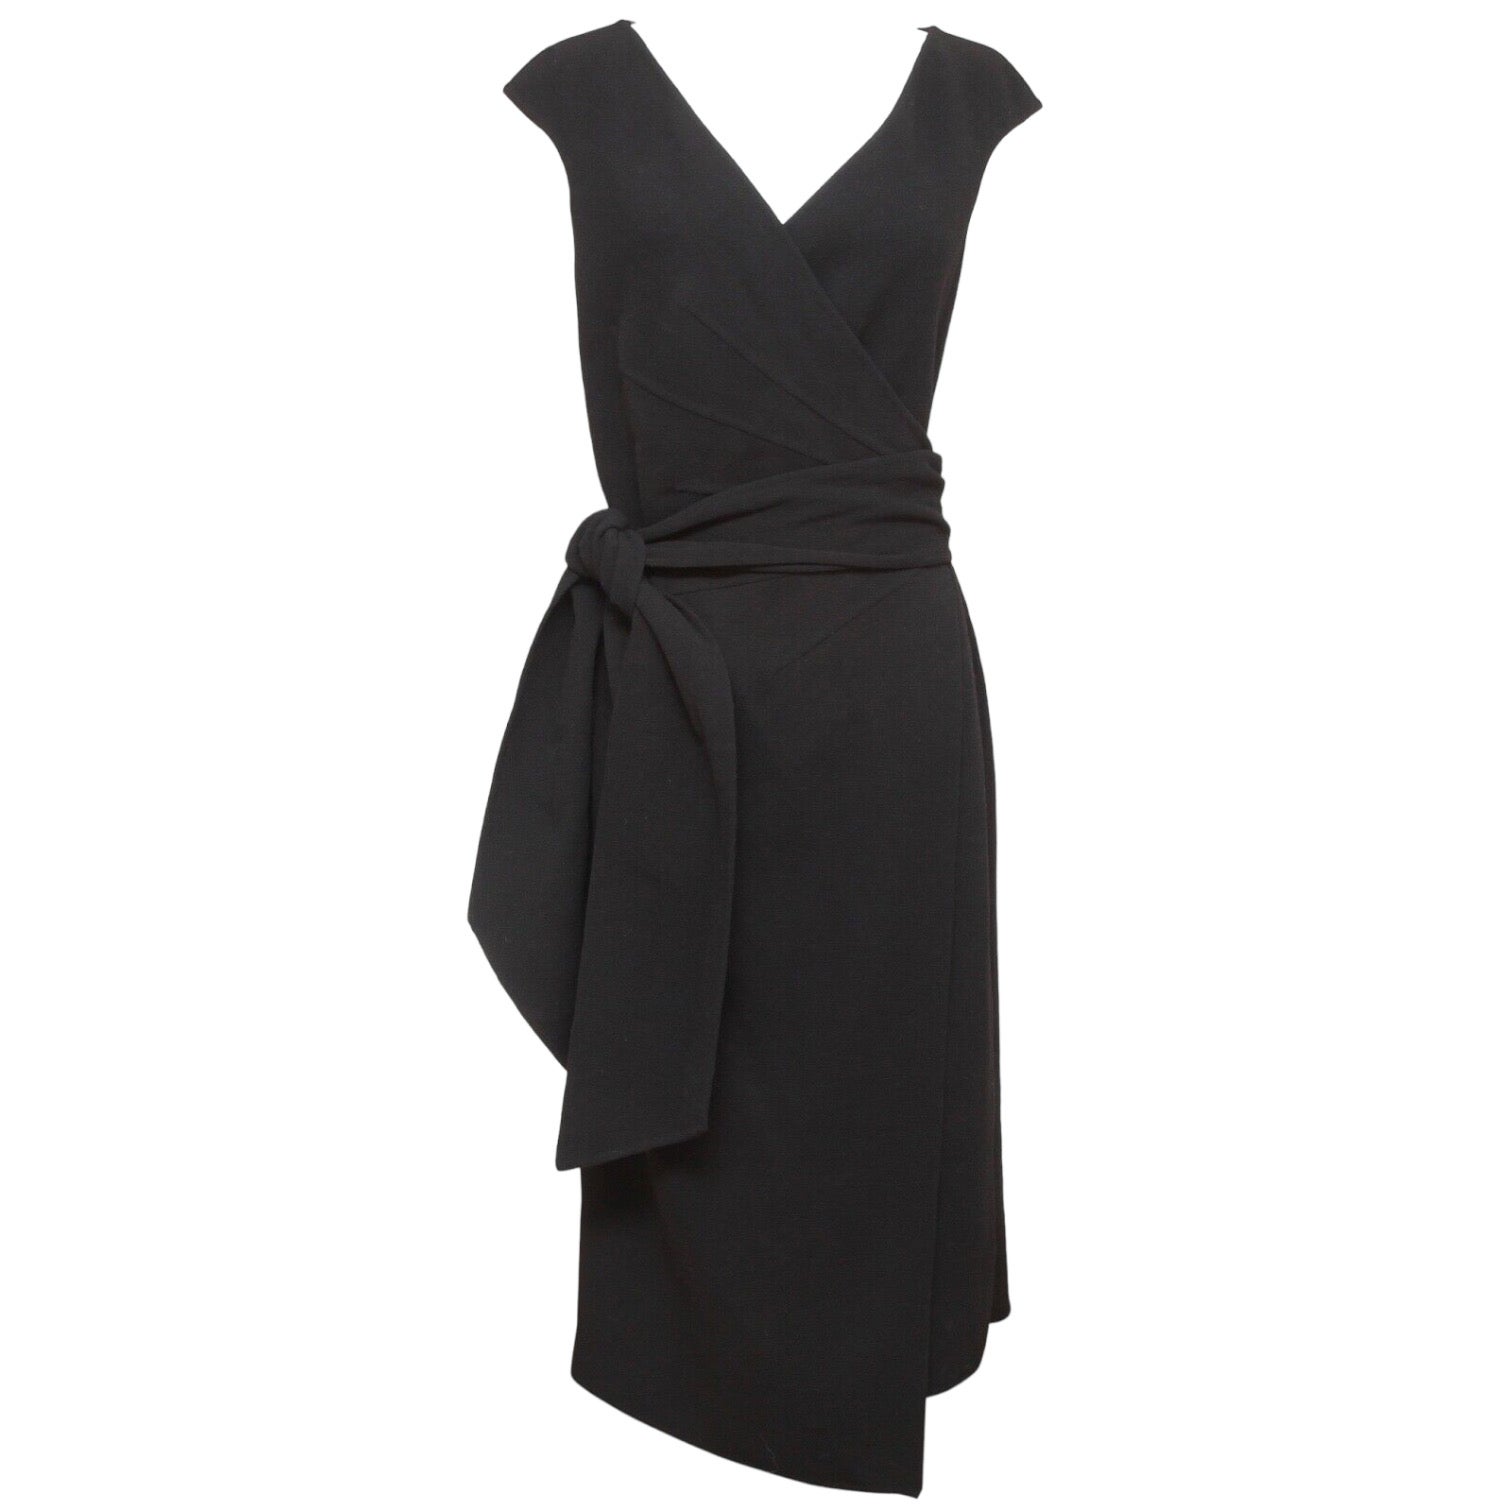 OSCAR DE LA RENTA Kleid Schwarz ärmellos Wrap Knit Sz 8 NWT $2190 im Angebot